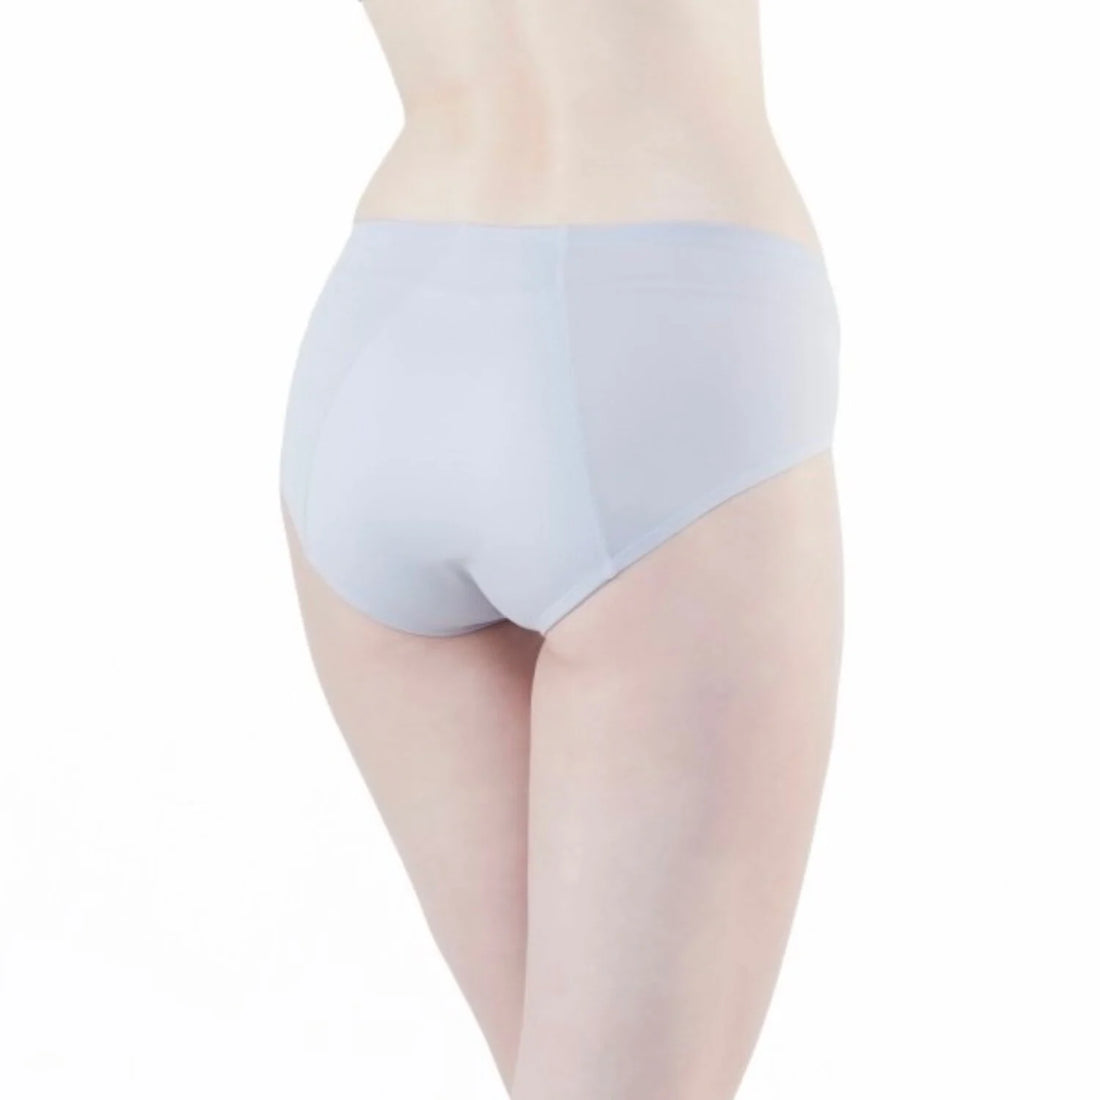 Wacoal Hygieni night ANTI Odor night panty Bikini Pattern Model WU5253 Gray (GY)